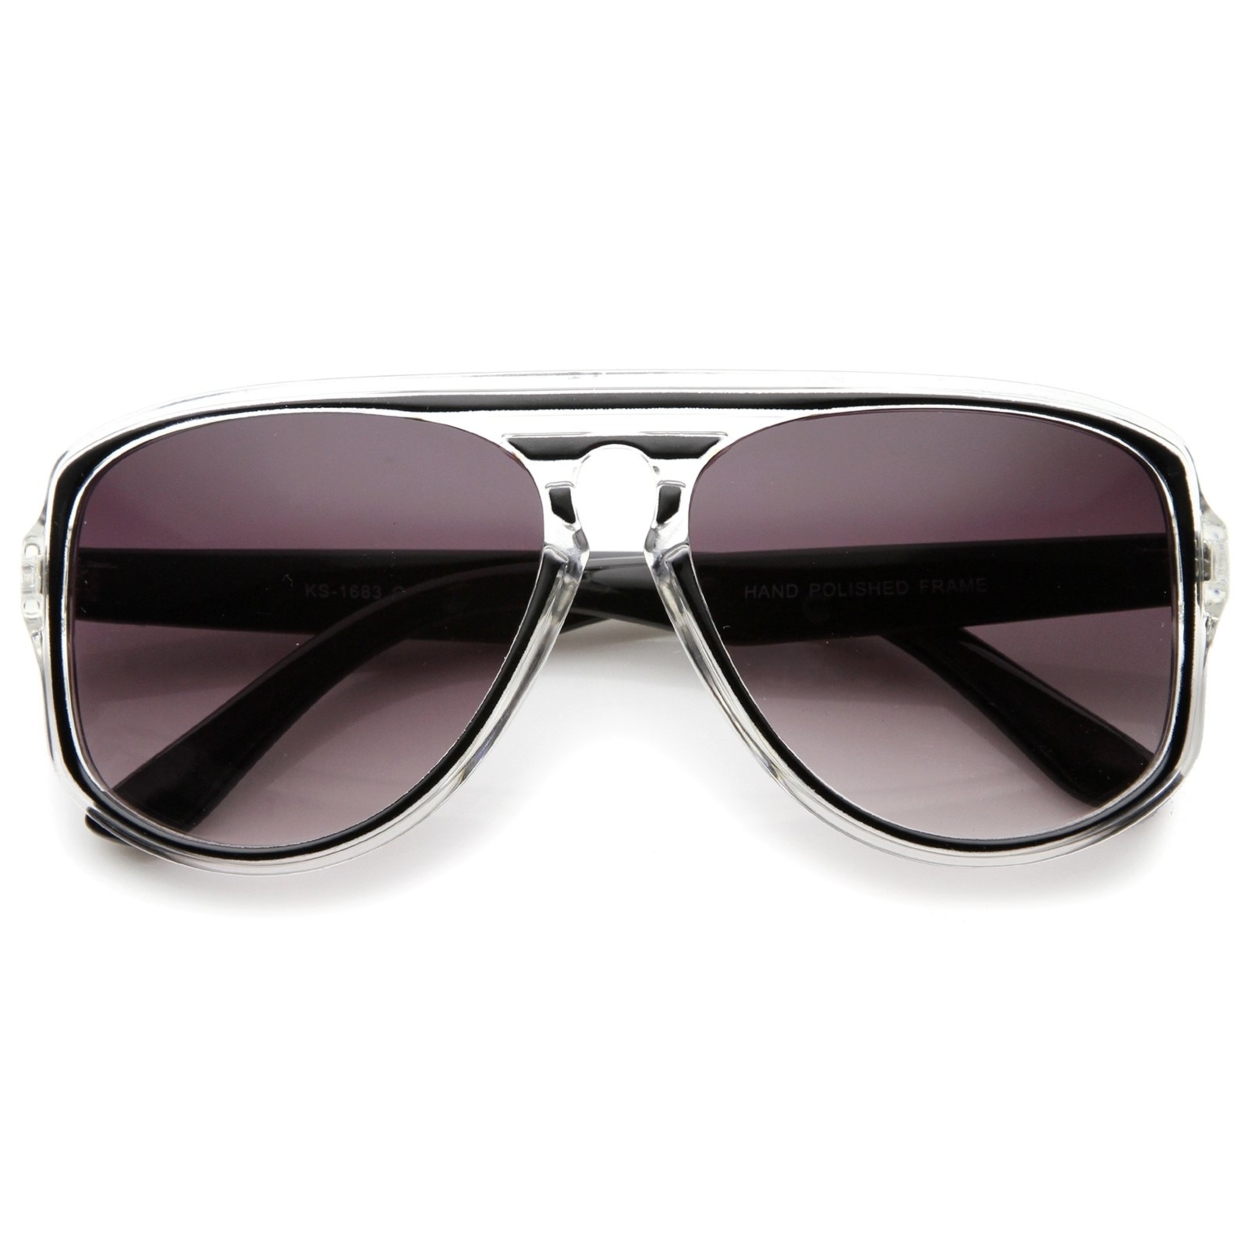 Modern Translucent Frame Keyhole Flat Top Square Aviator Sunglasses 46mm - Black / Lavender